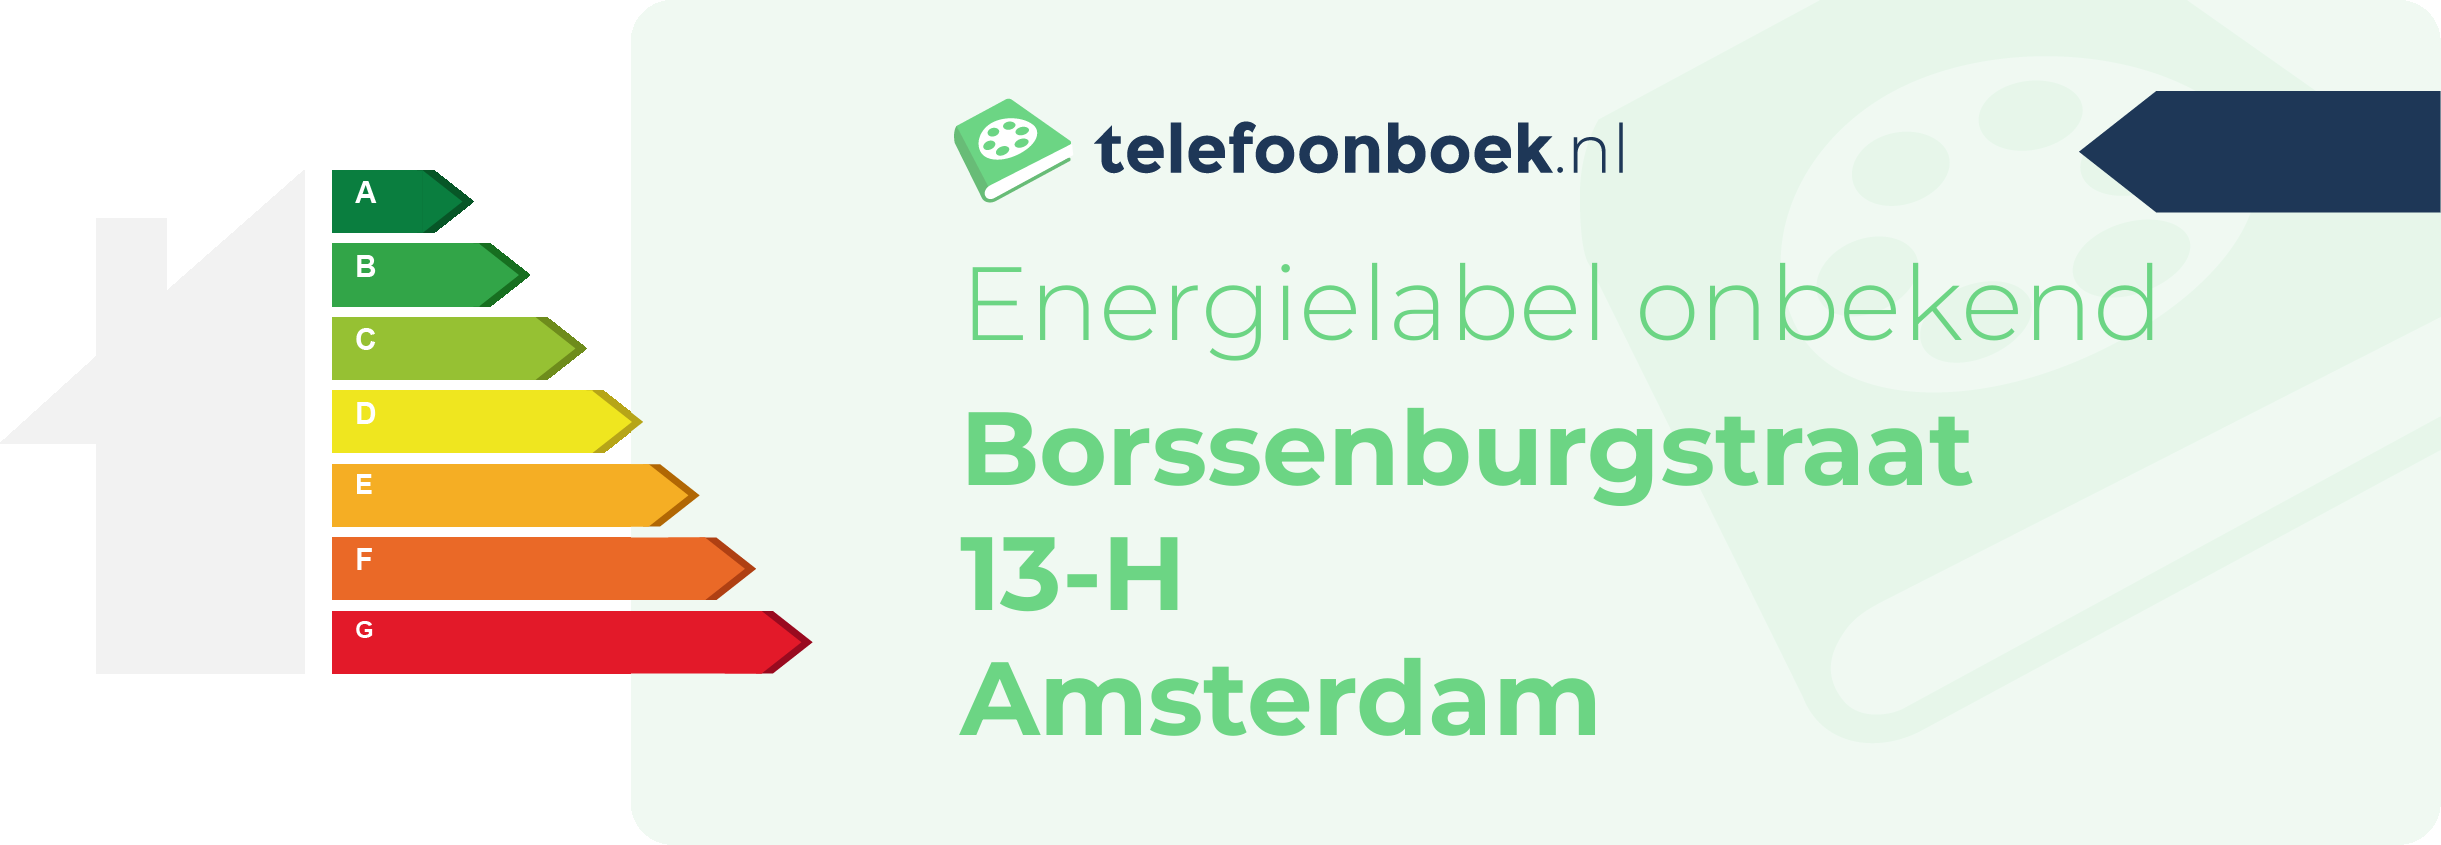 Energielabel Borssenburgstraat 13-H Amsterdam